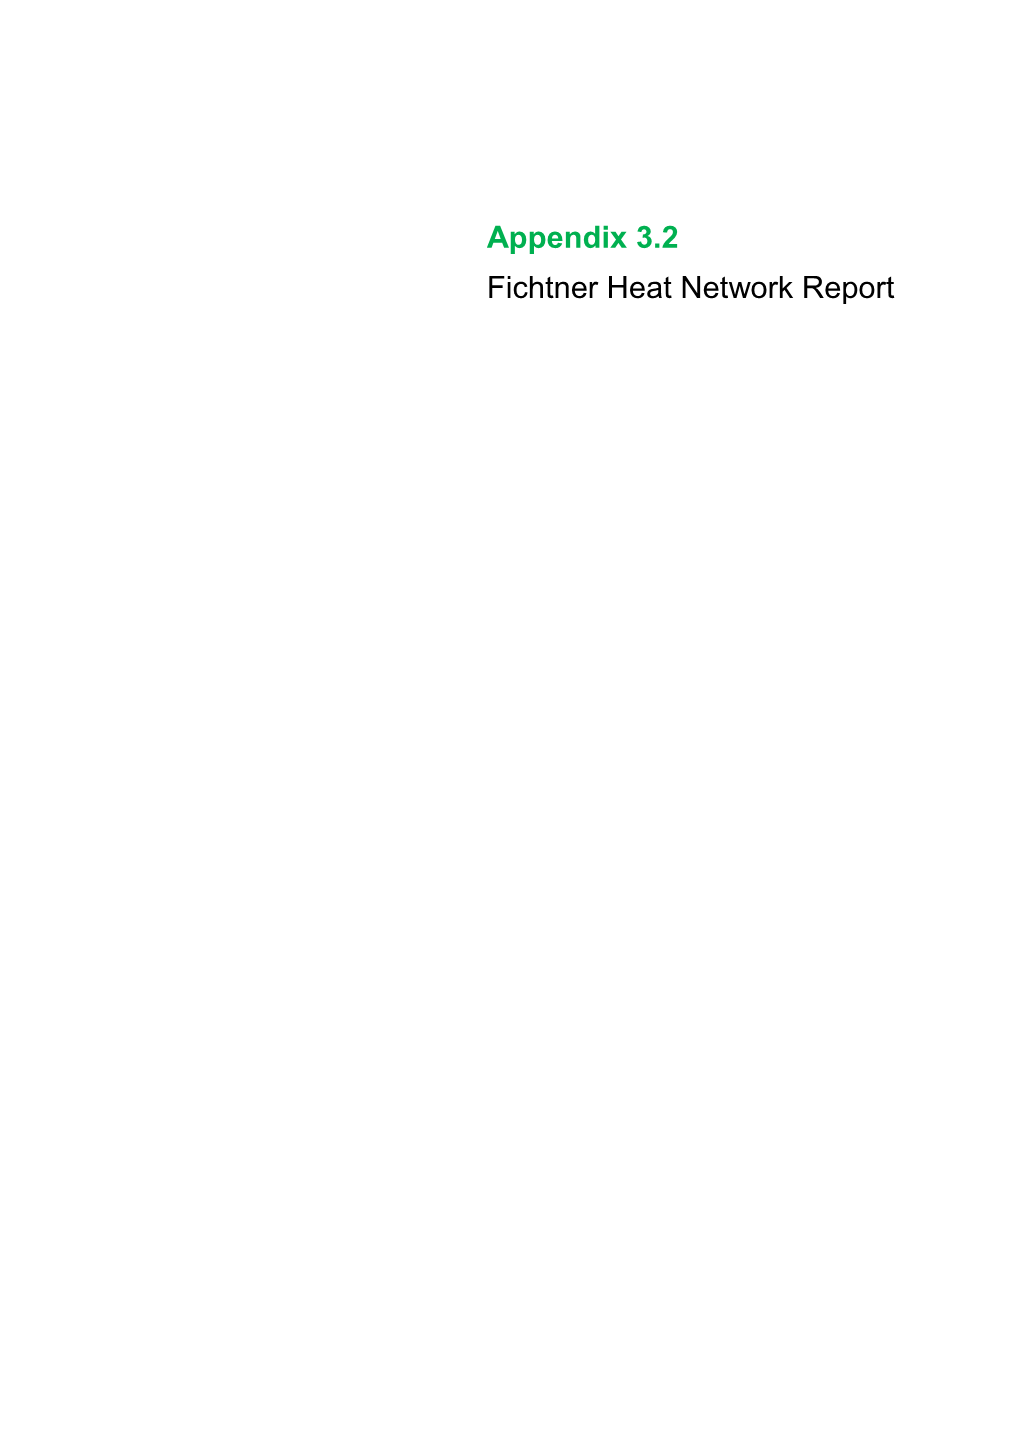 Appendix 3.2 Fichtner Heat Network Report